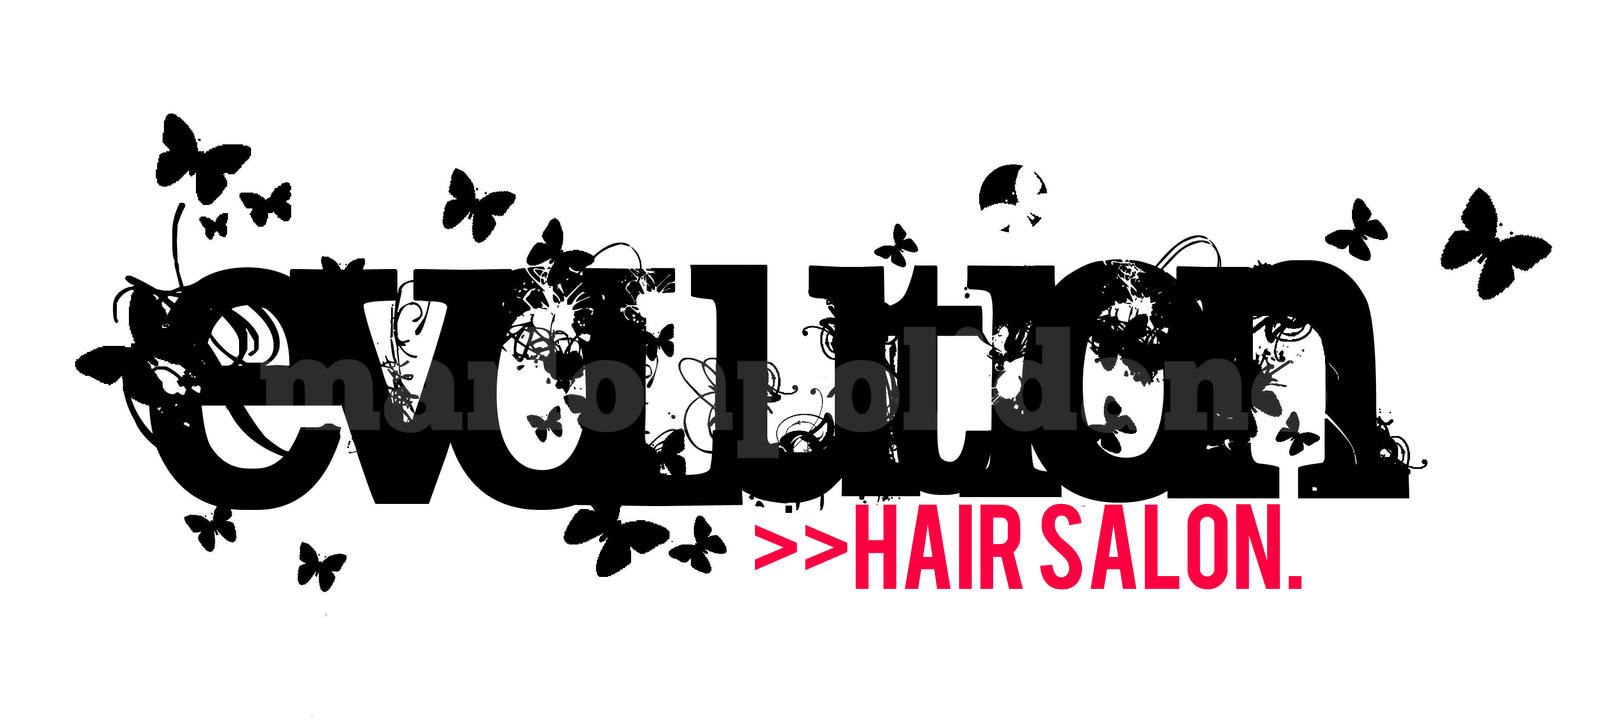 EVOLUTION HAIR SALON LOGO by marlonpolidano on DeviantArt